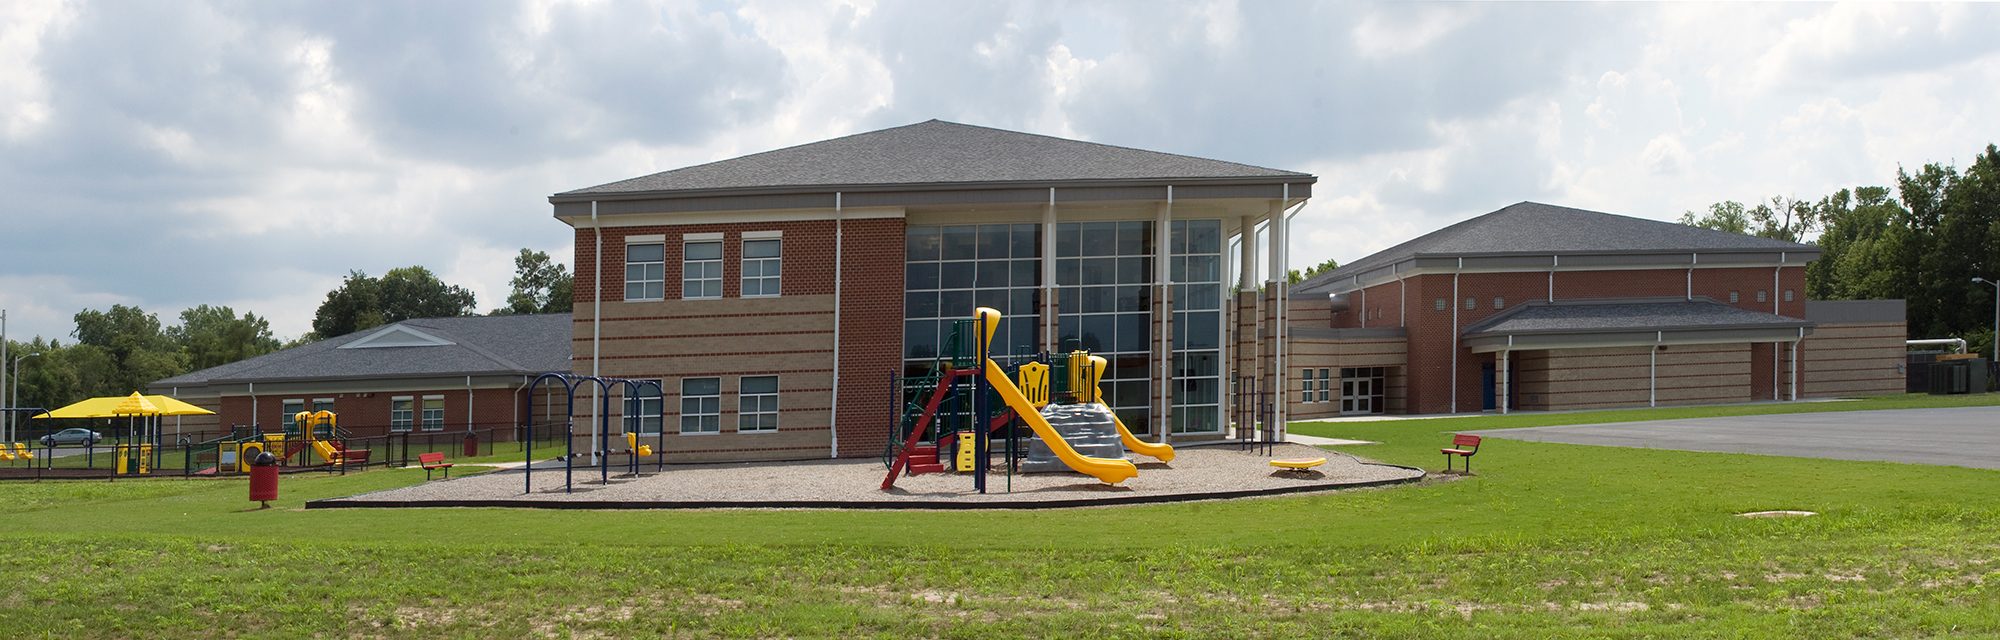 Playground at Hillpoint Elementary School